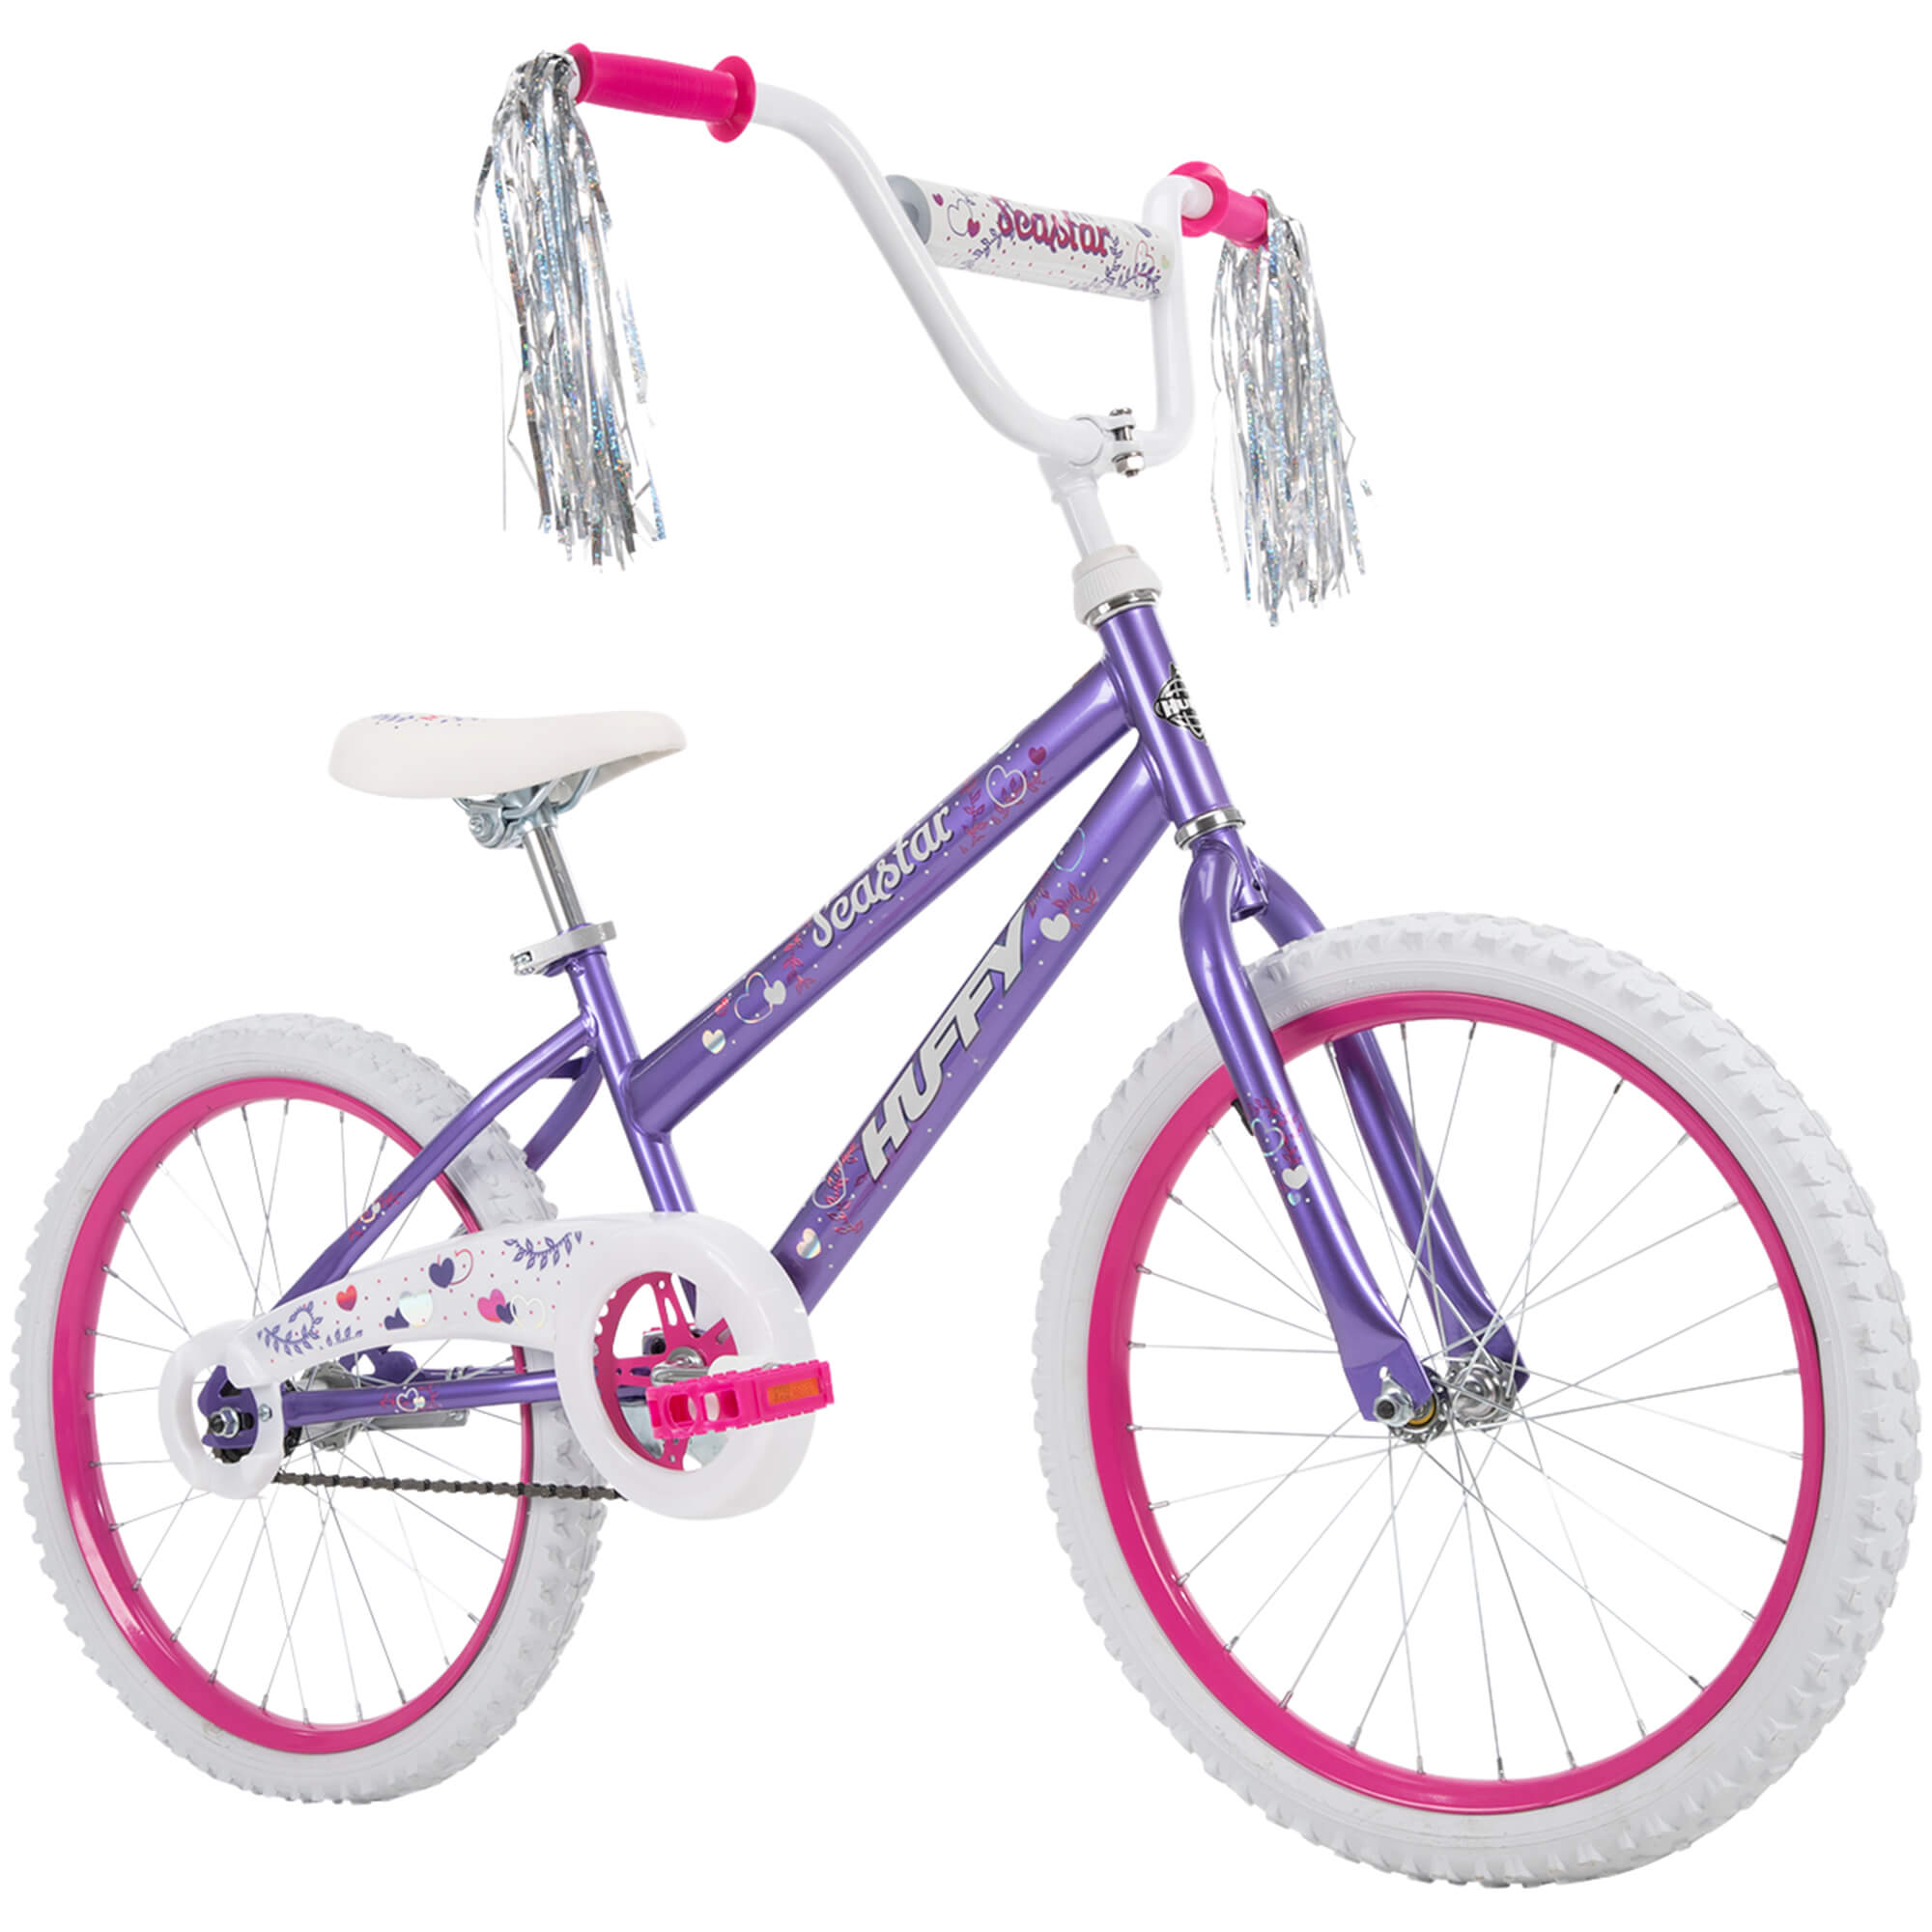 Huffy 20" Sea Star Girls Bike for Kids, Purple - image 1 of 7